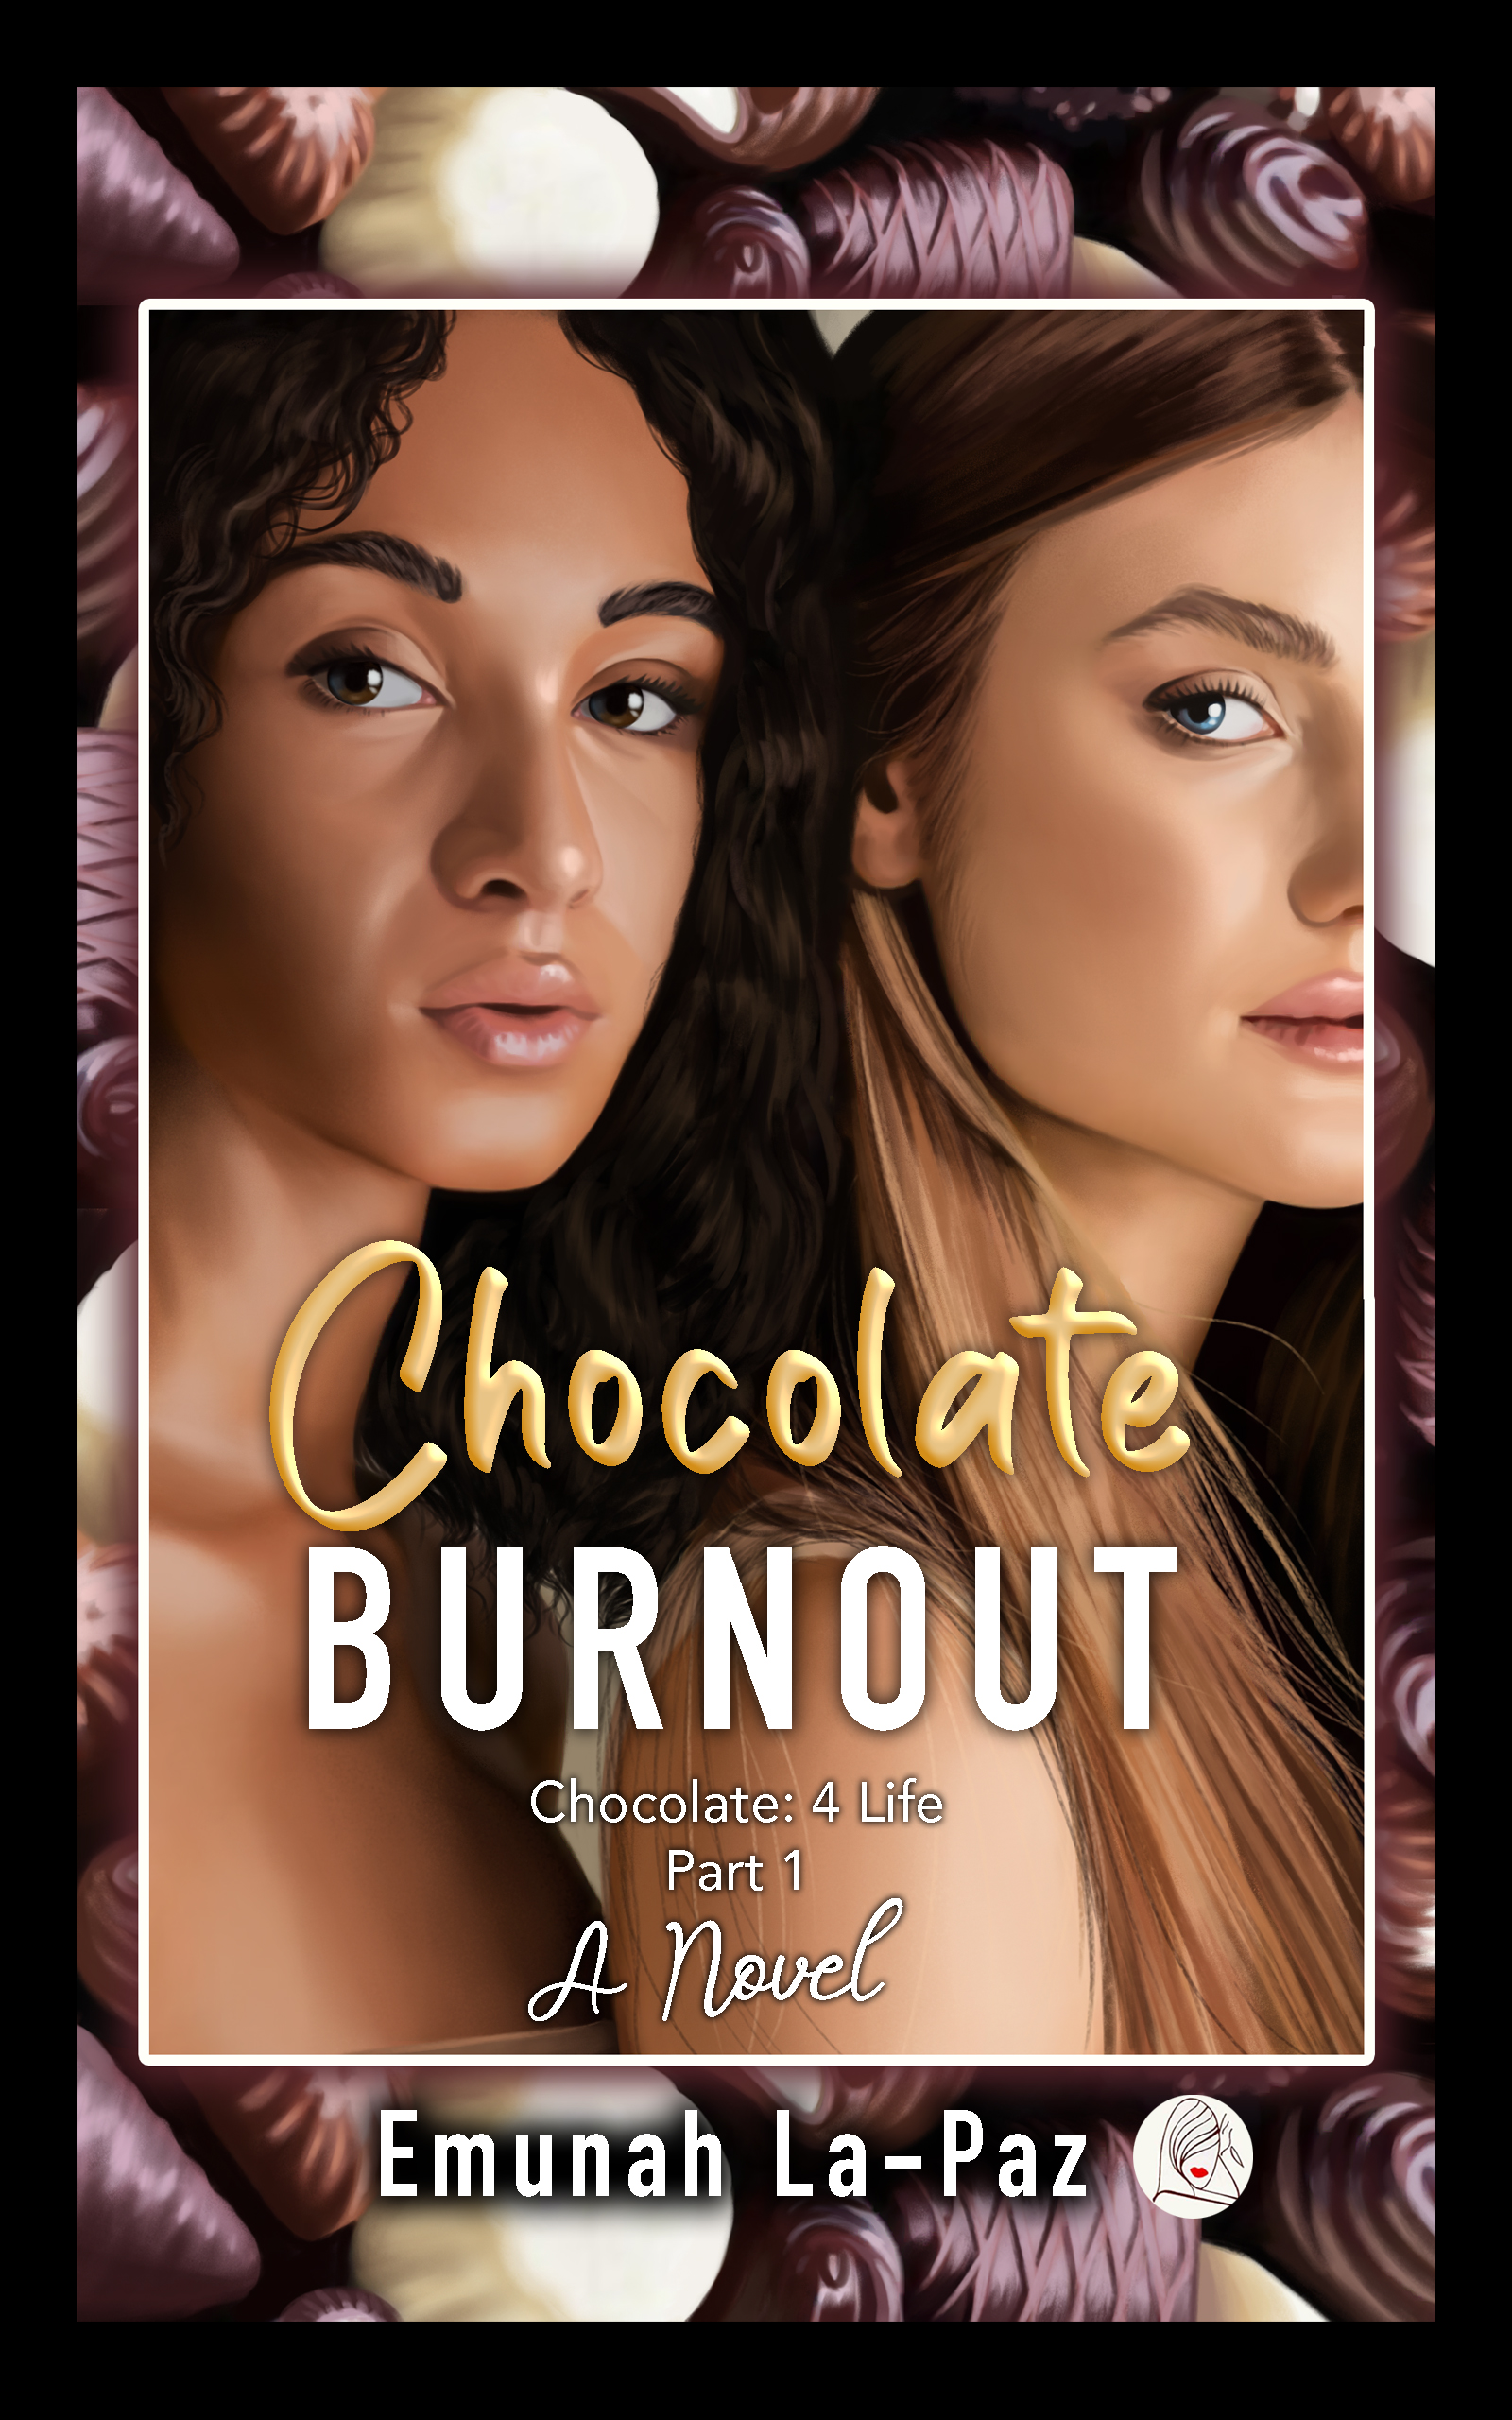 Chocolate Burnout by Emunah La-Paz